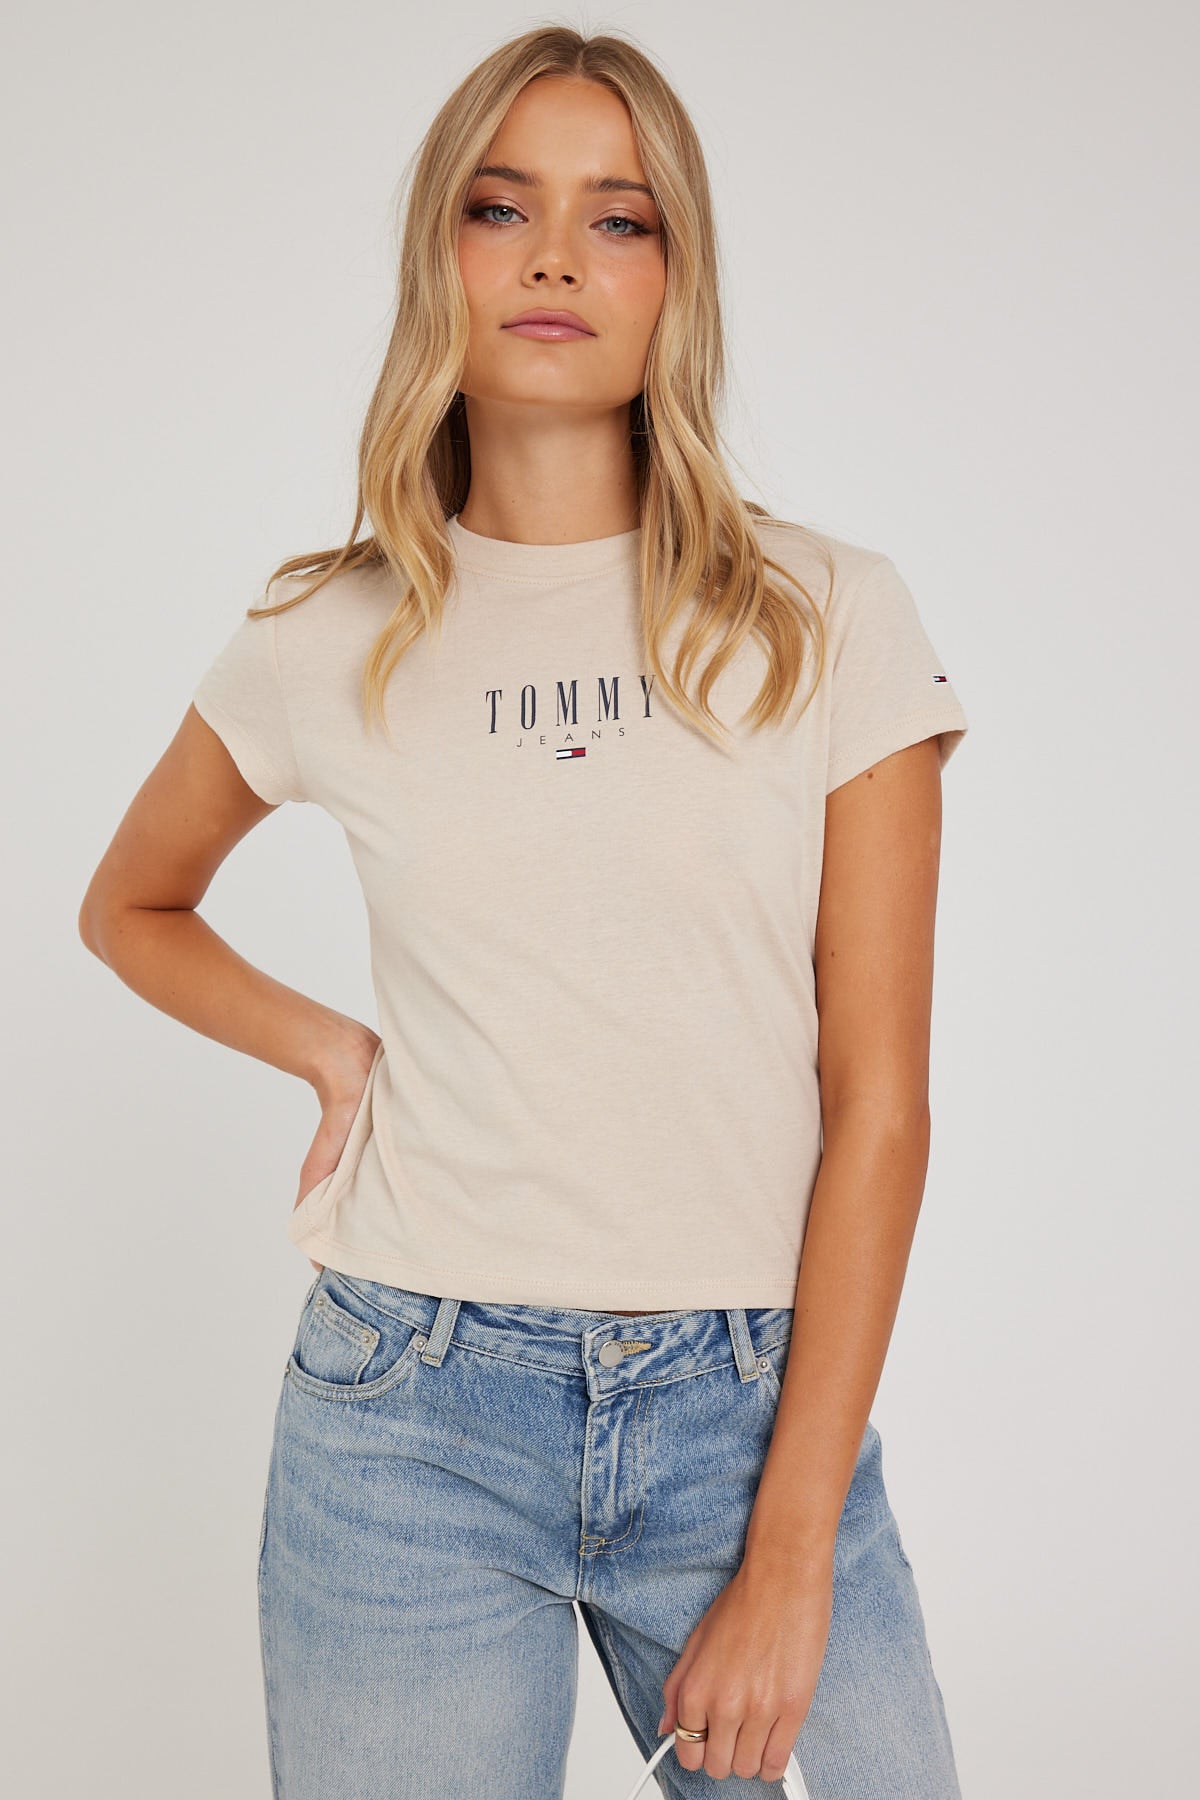 Jeans Store – Linear Universal Coastal TJW Baby Sleeve Serif Green Short Tommy Tee